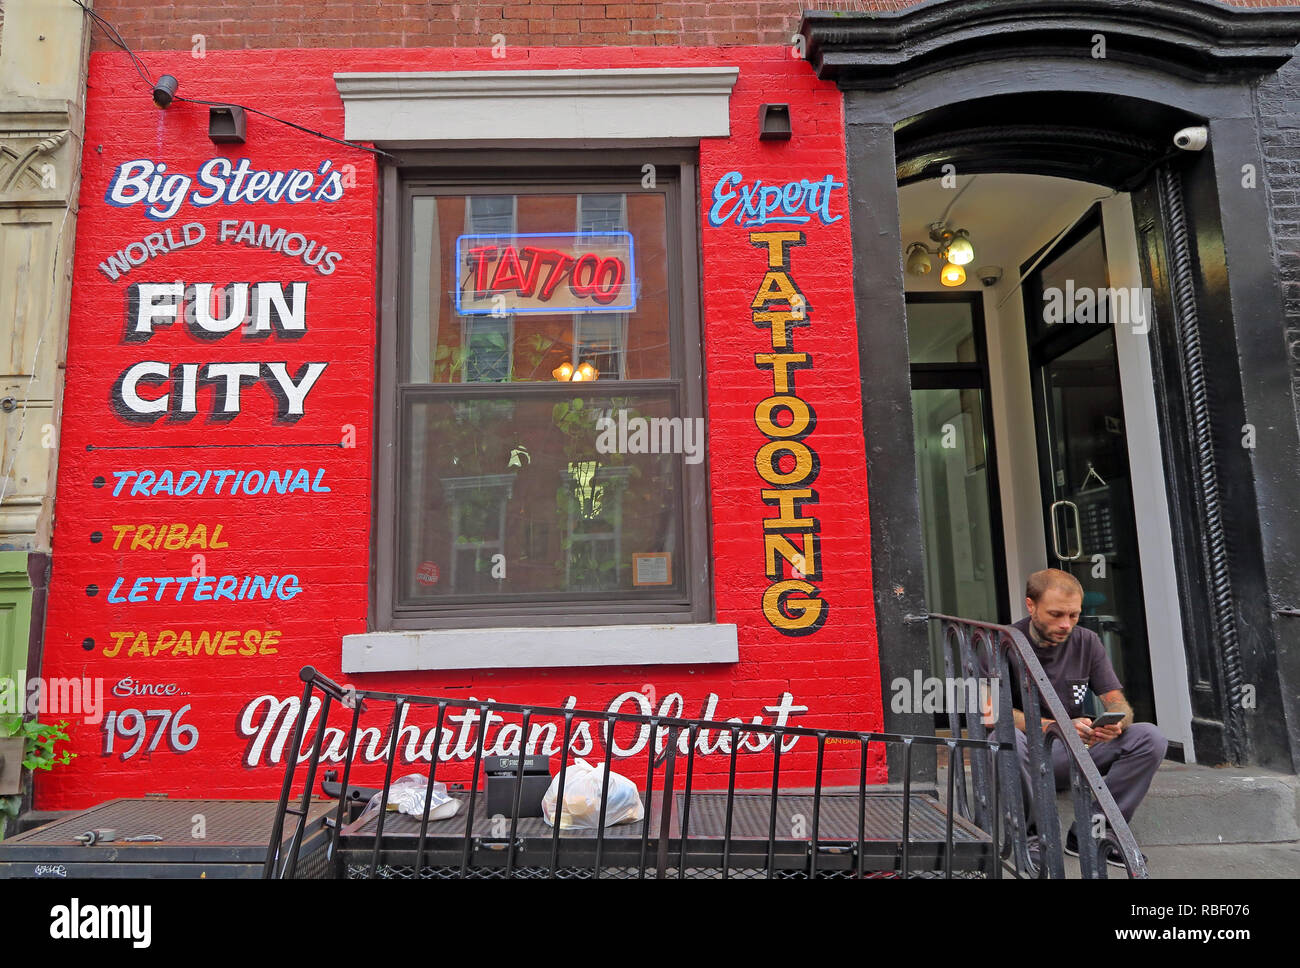 Big Steves, berühmten Fun City, Experte tätowieren Tätowierer, 94 St Marks Pace, East Village, Manhattan, New York, NY, USA Stockfoto